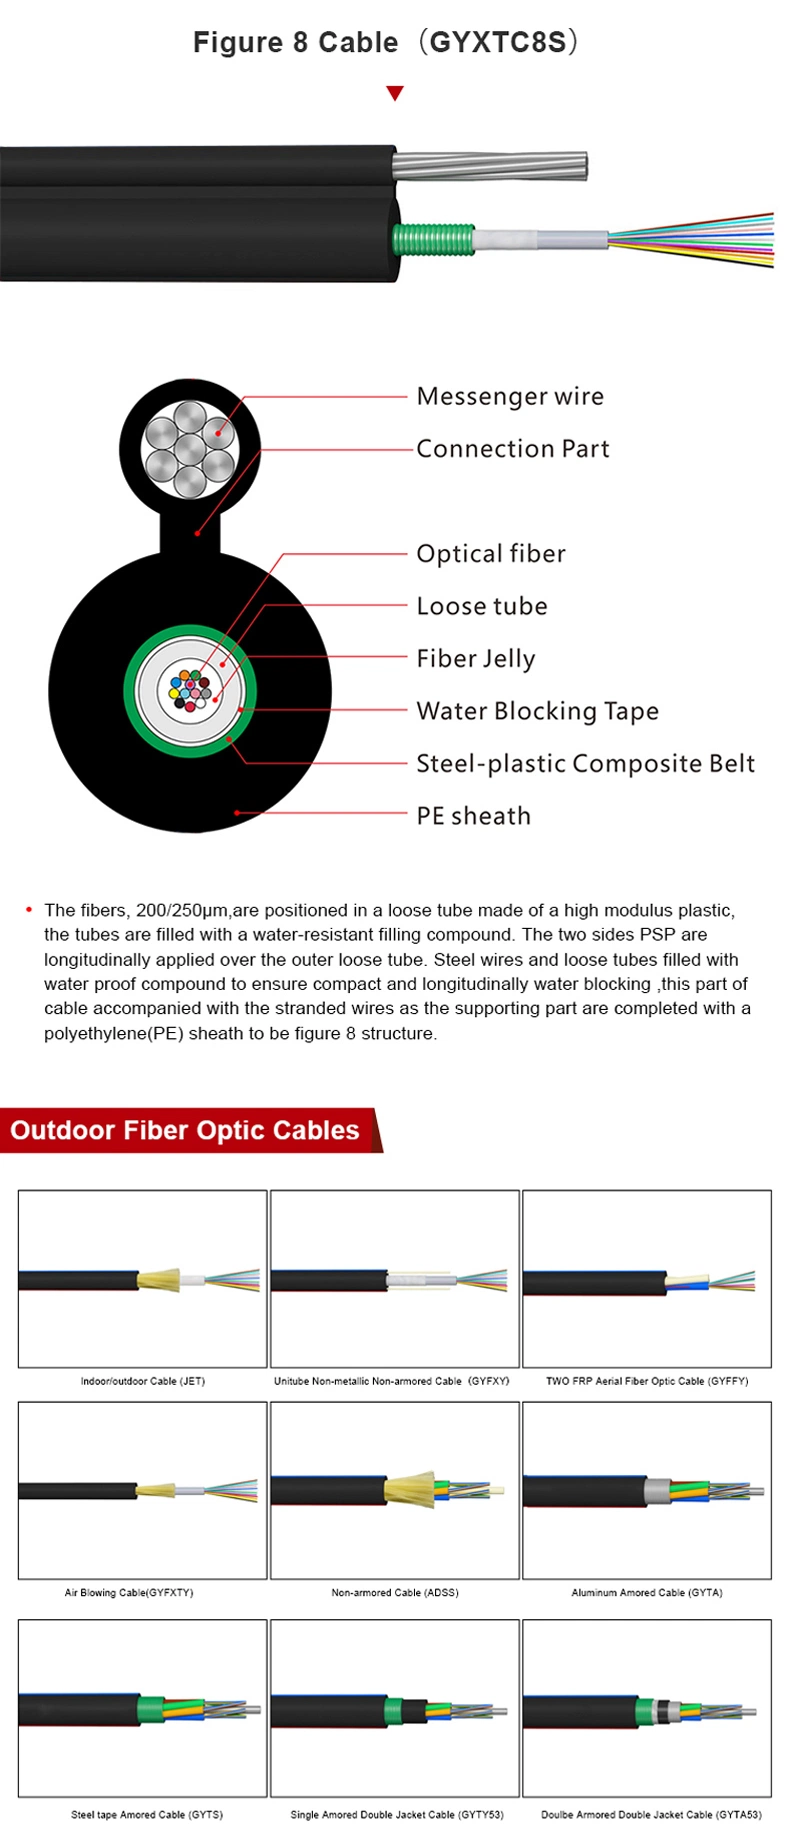 Outdoor Small Lose Tube Fiber Optic Cable Jet Optical Fiber